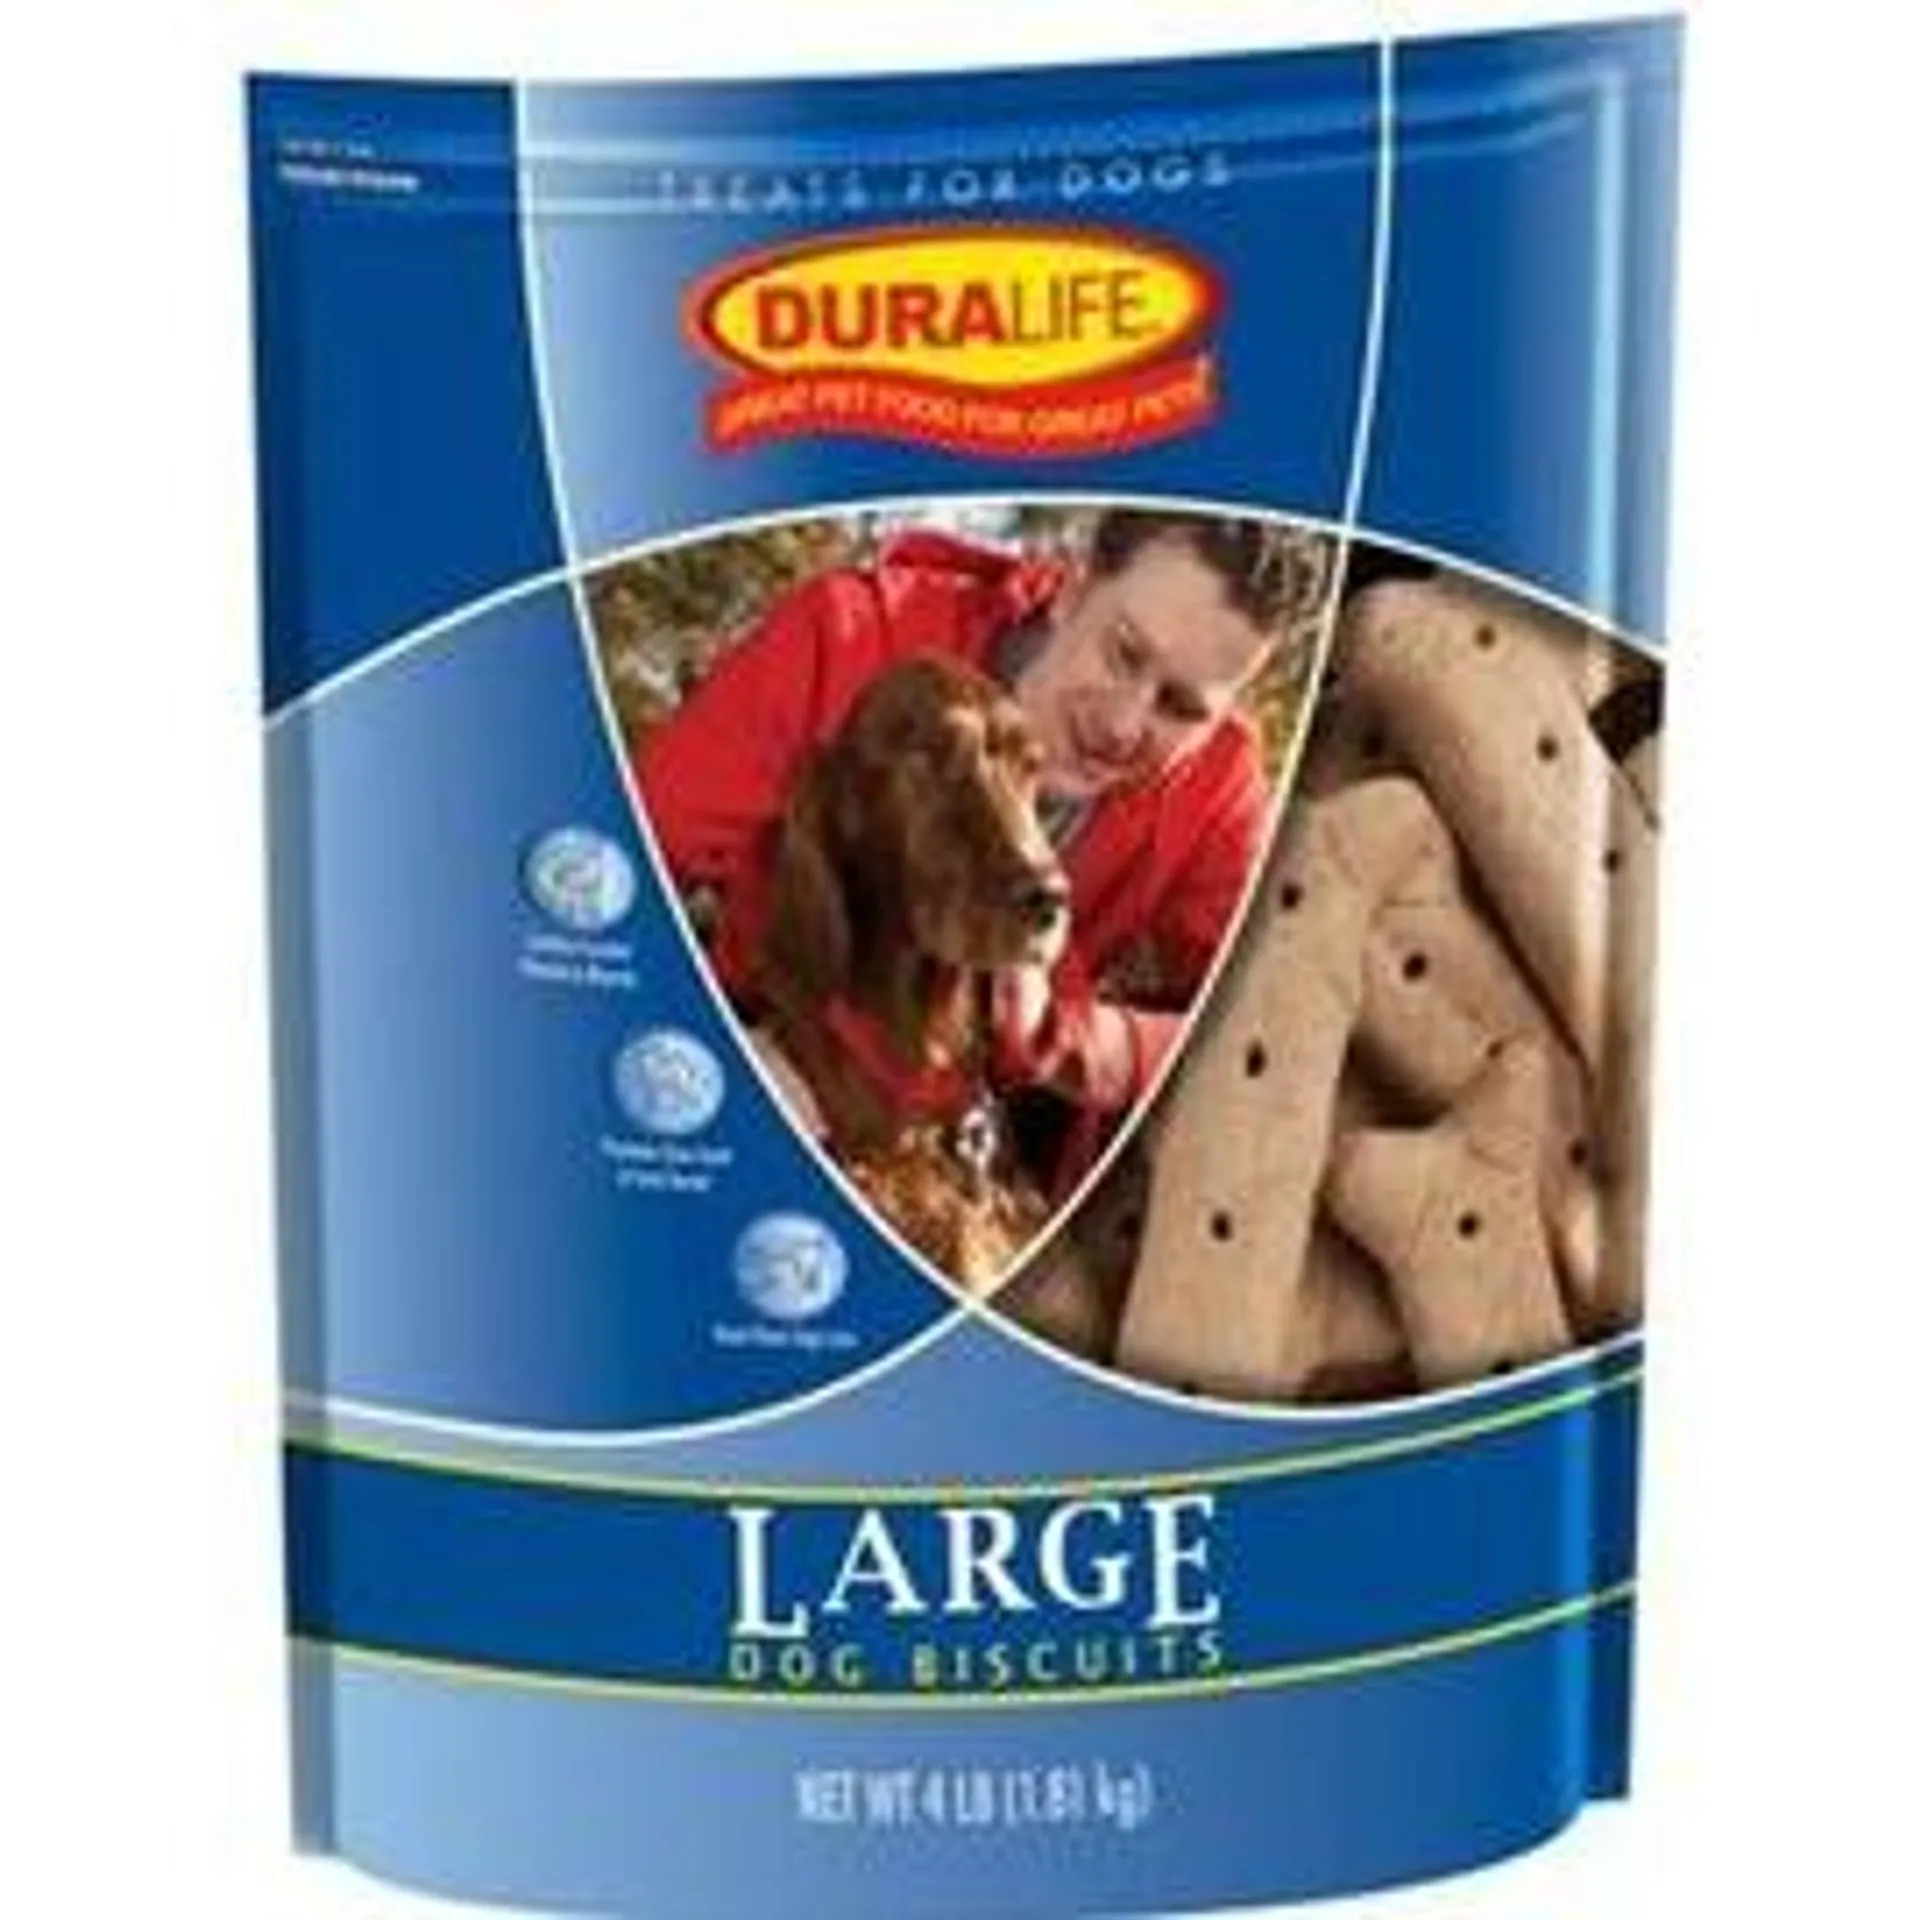 Duralife Large Bisquits, 4 lb. bag